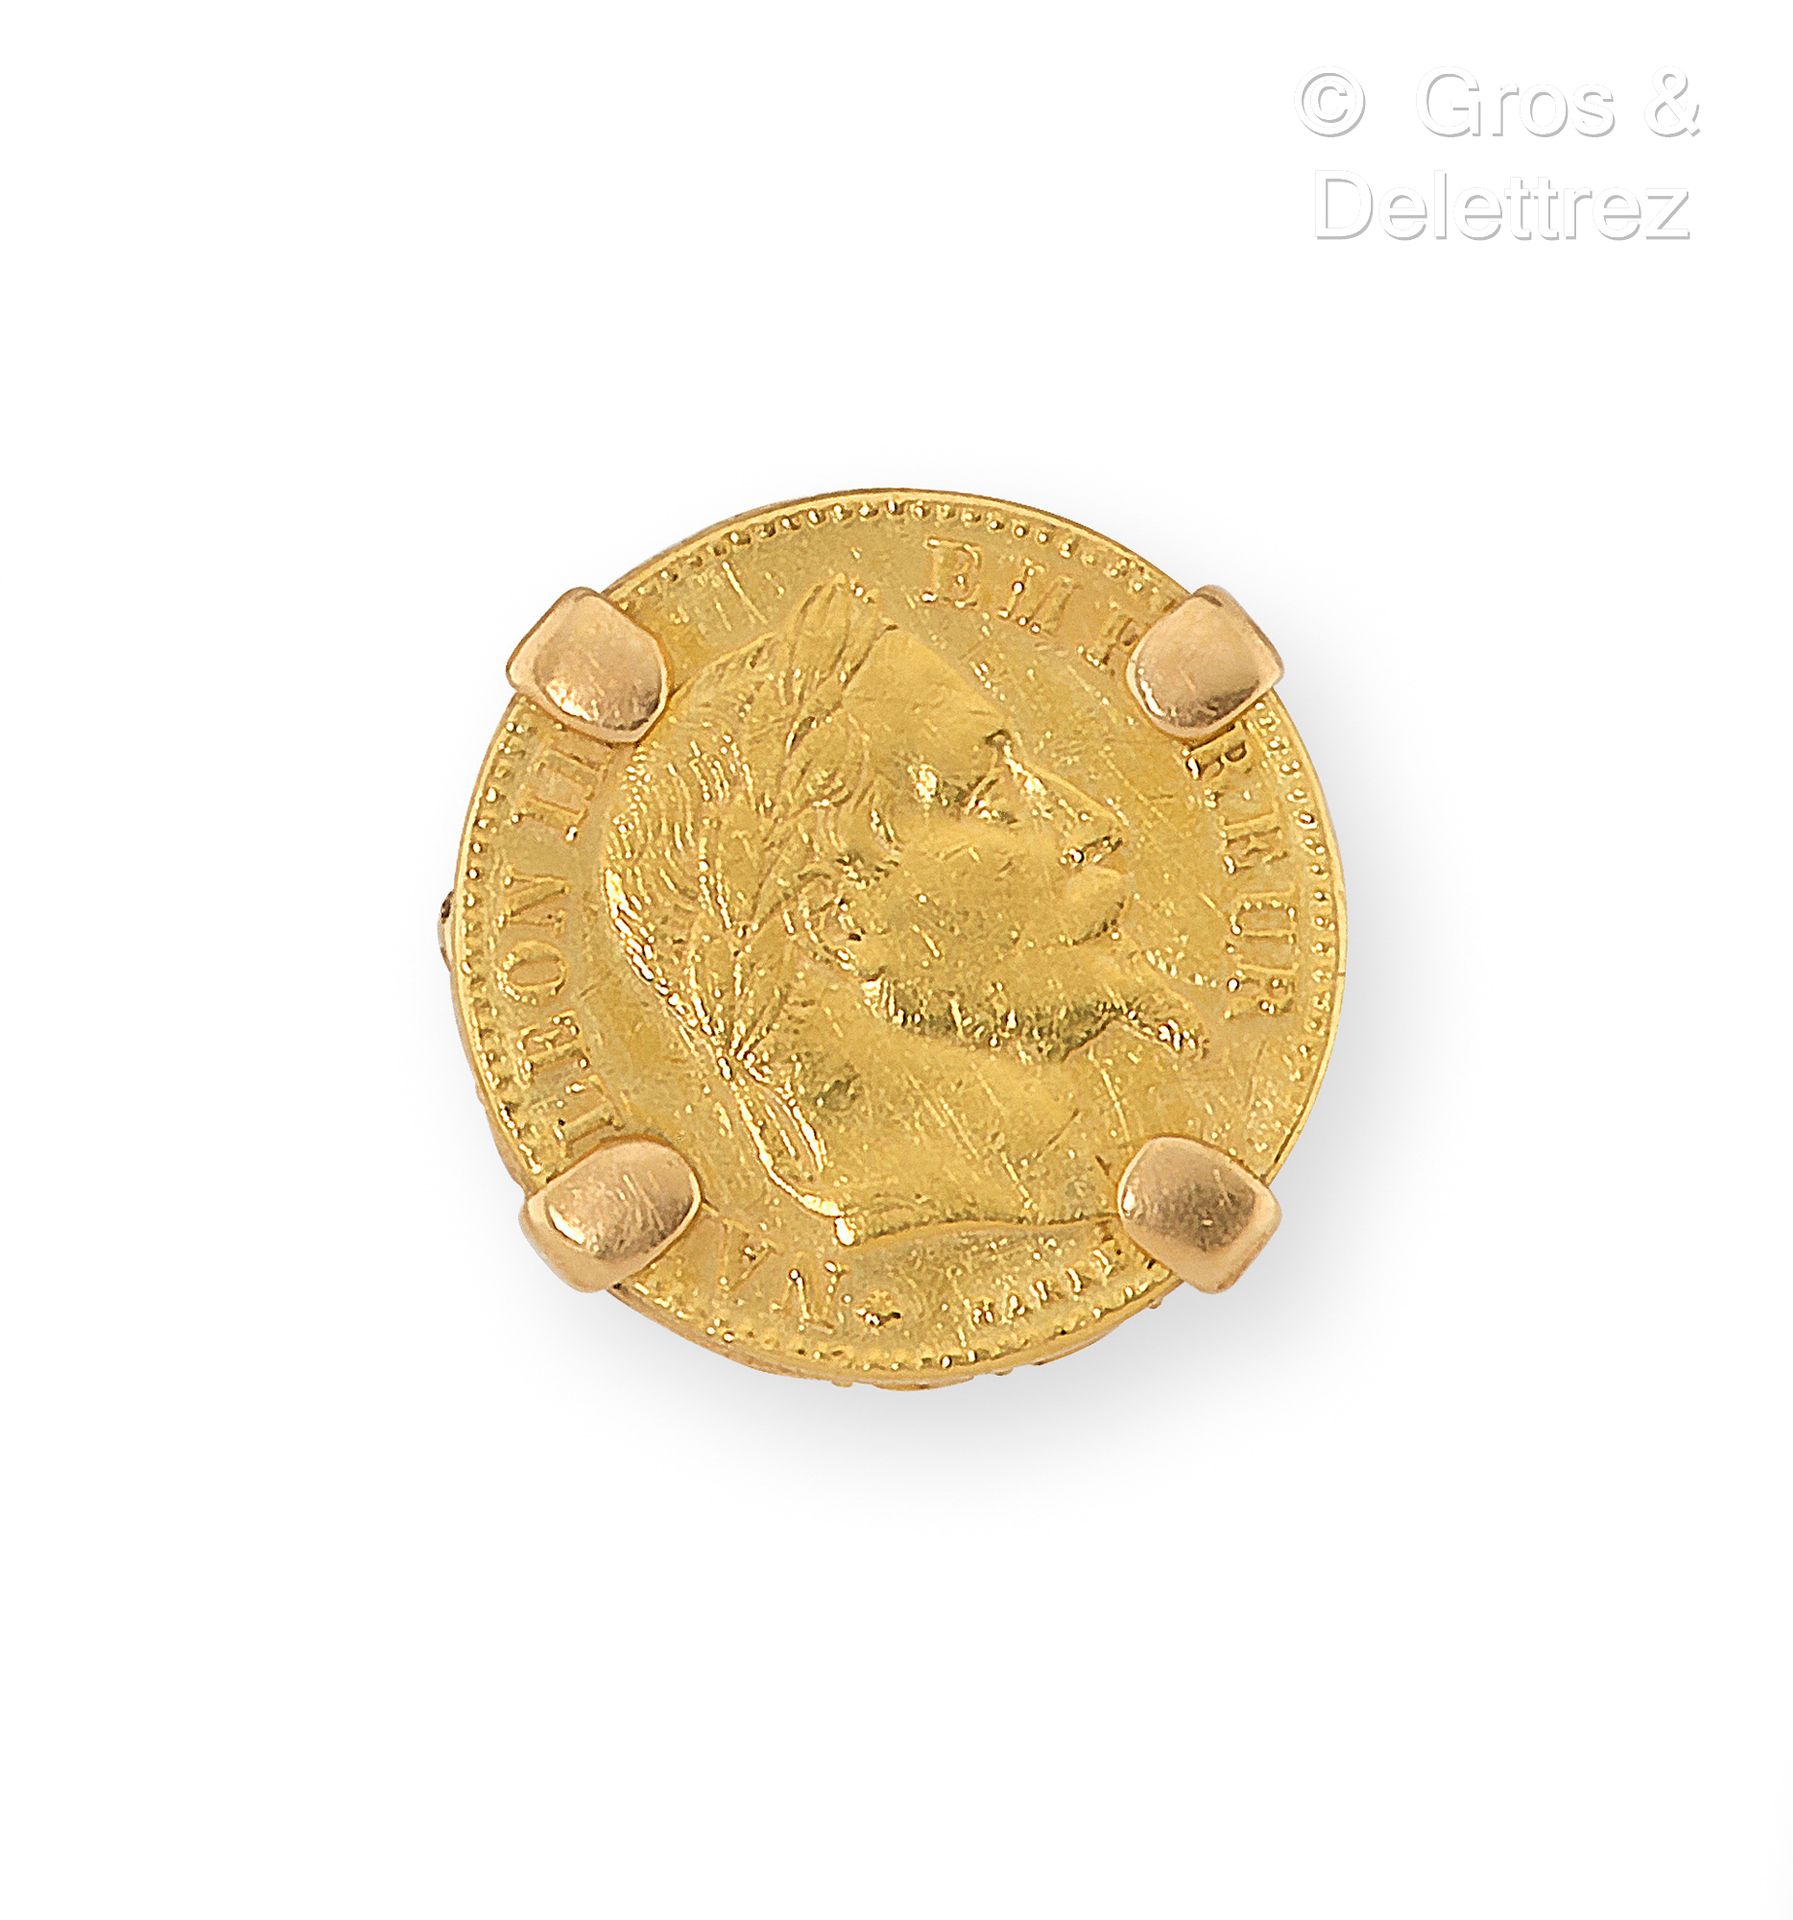 Null 黄金戒指上有一枚10法郎的金币。手指大小：51。毛重：7.1克。